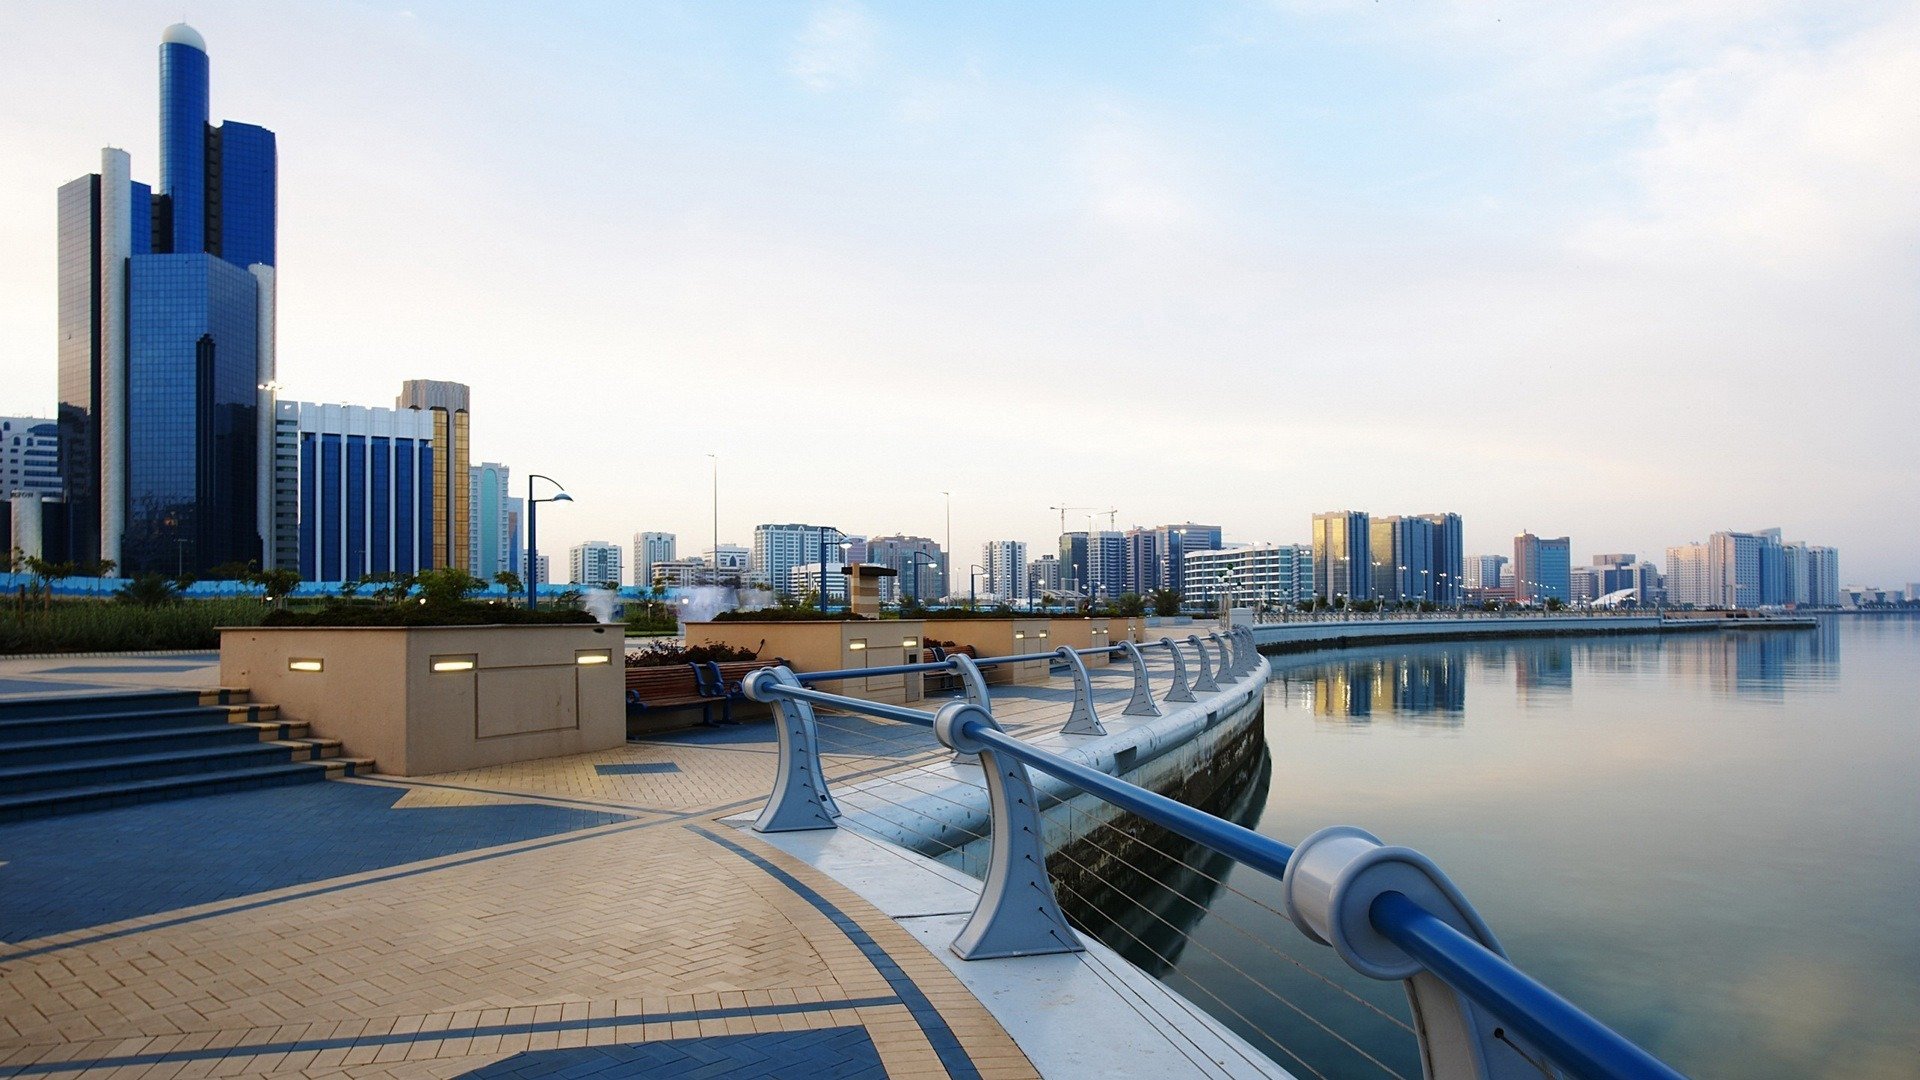 Download Abu Dhabi Man Made City  HD Wallpaper